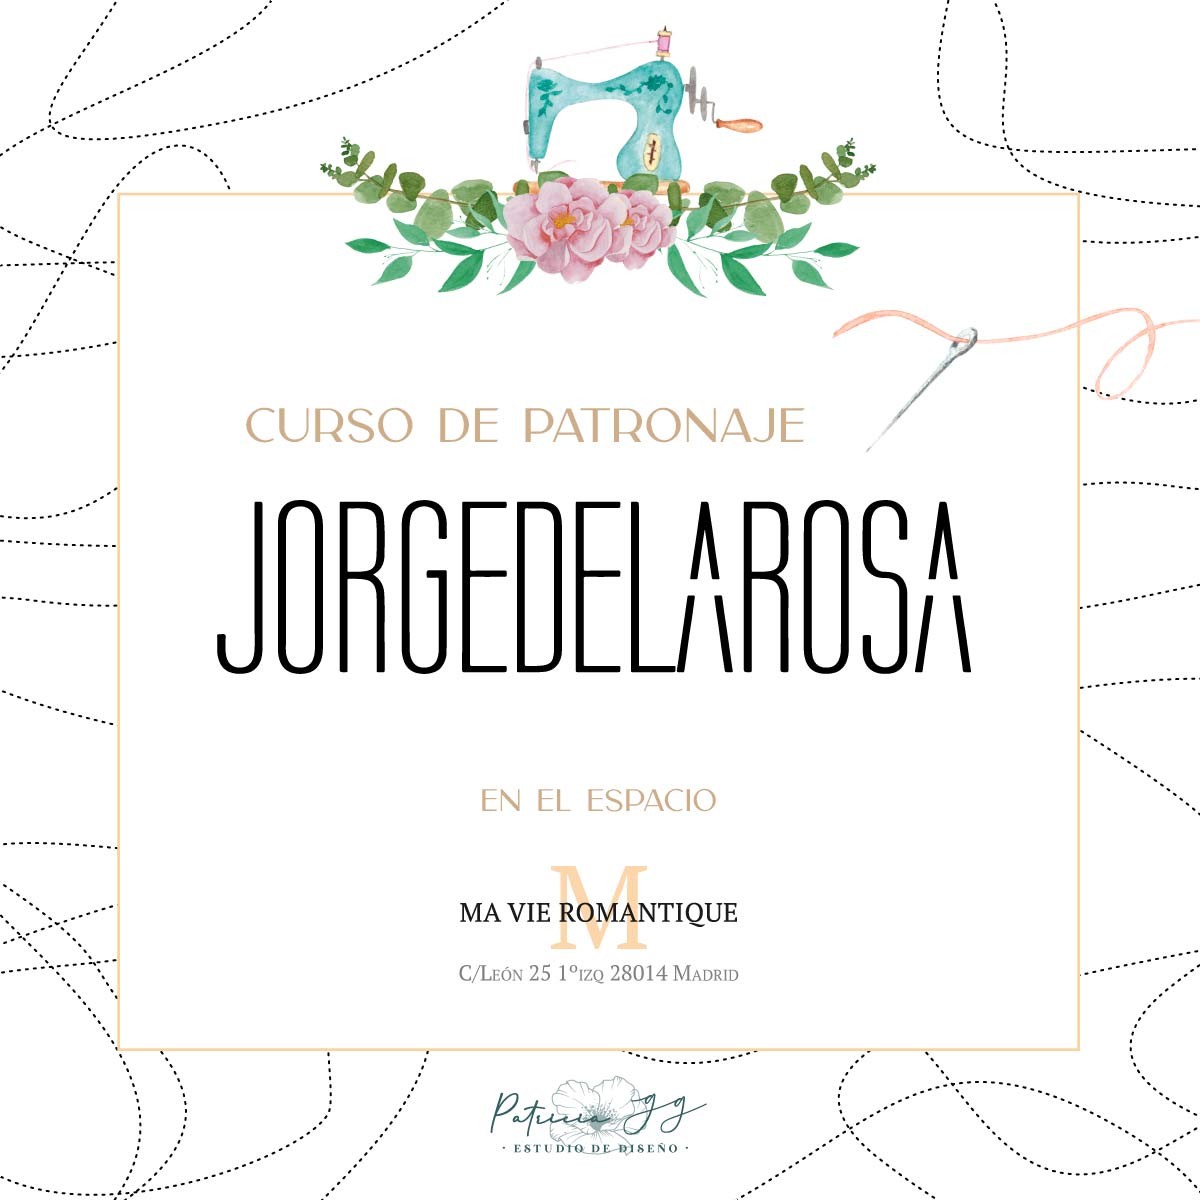 Curso de Patronaje Jorge de la Rosa